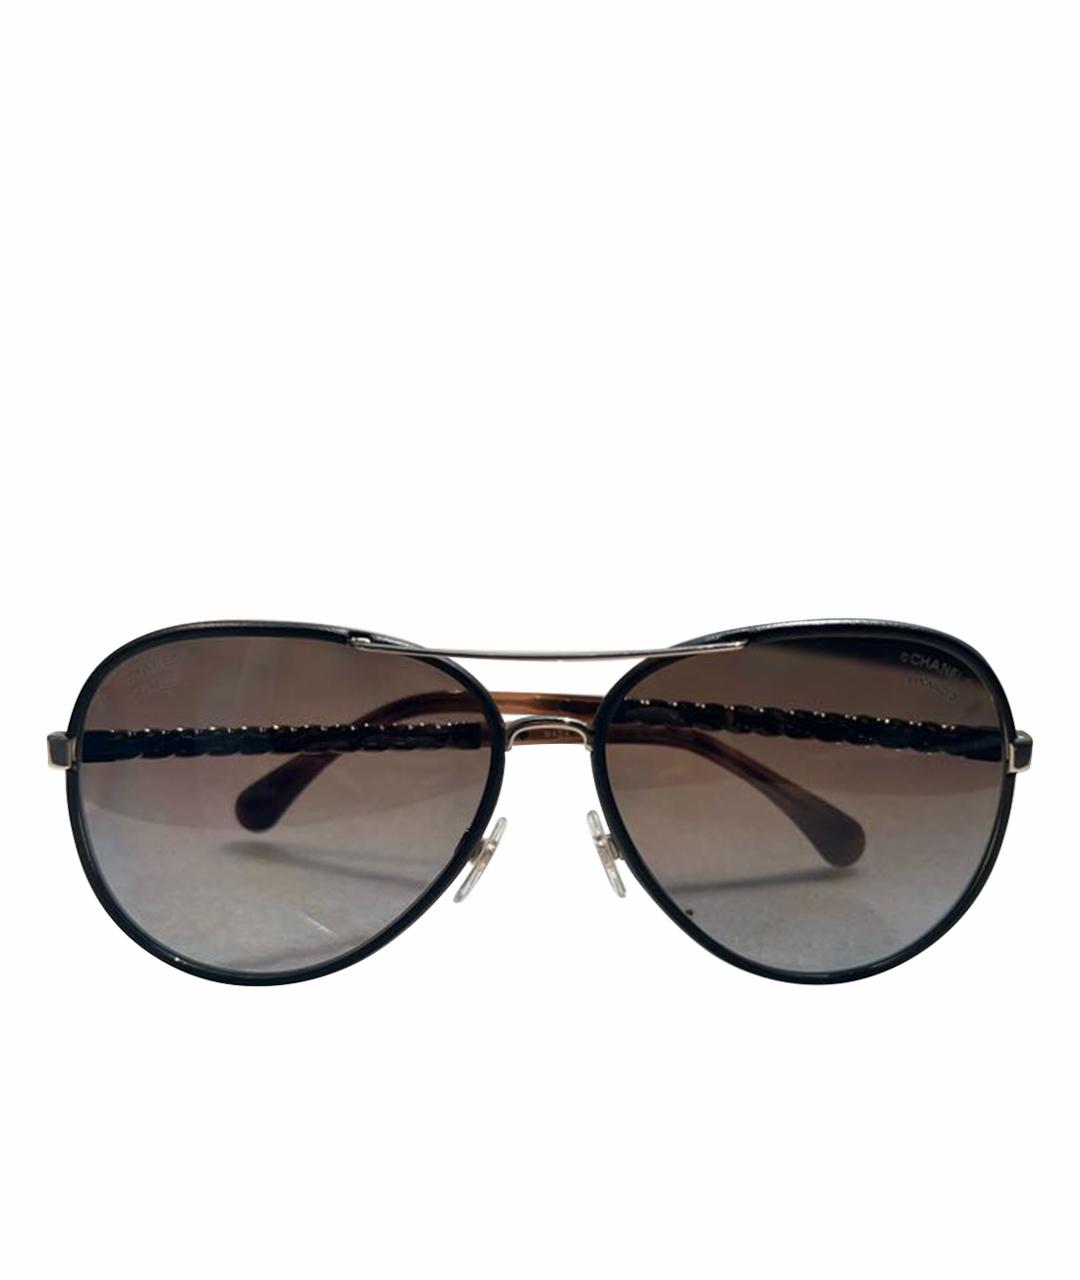 CHANEL PRE-OWNED Коричневые солнцезащитные очки, фото 1